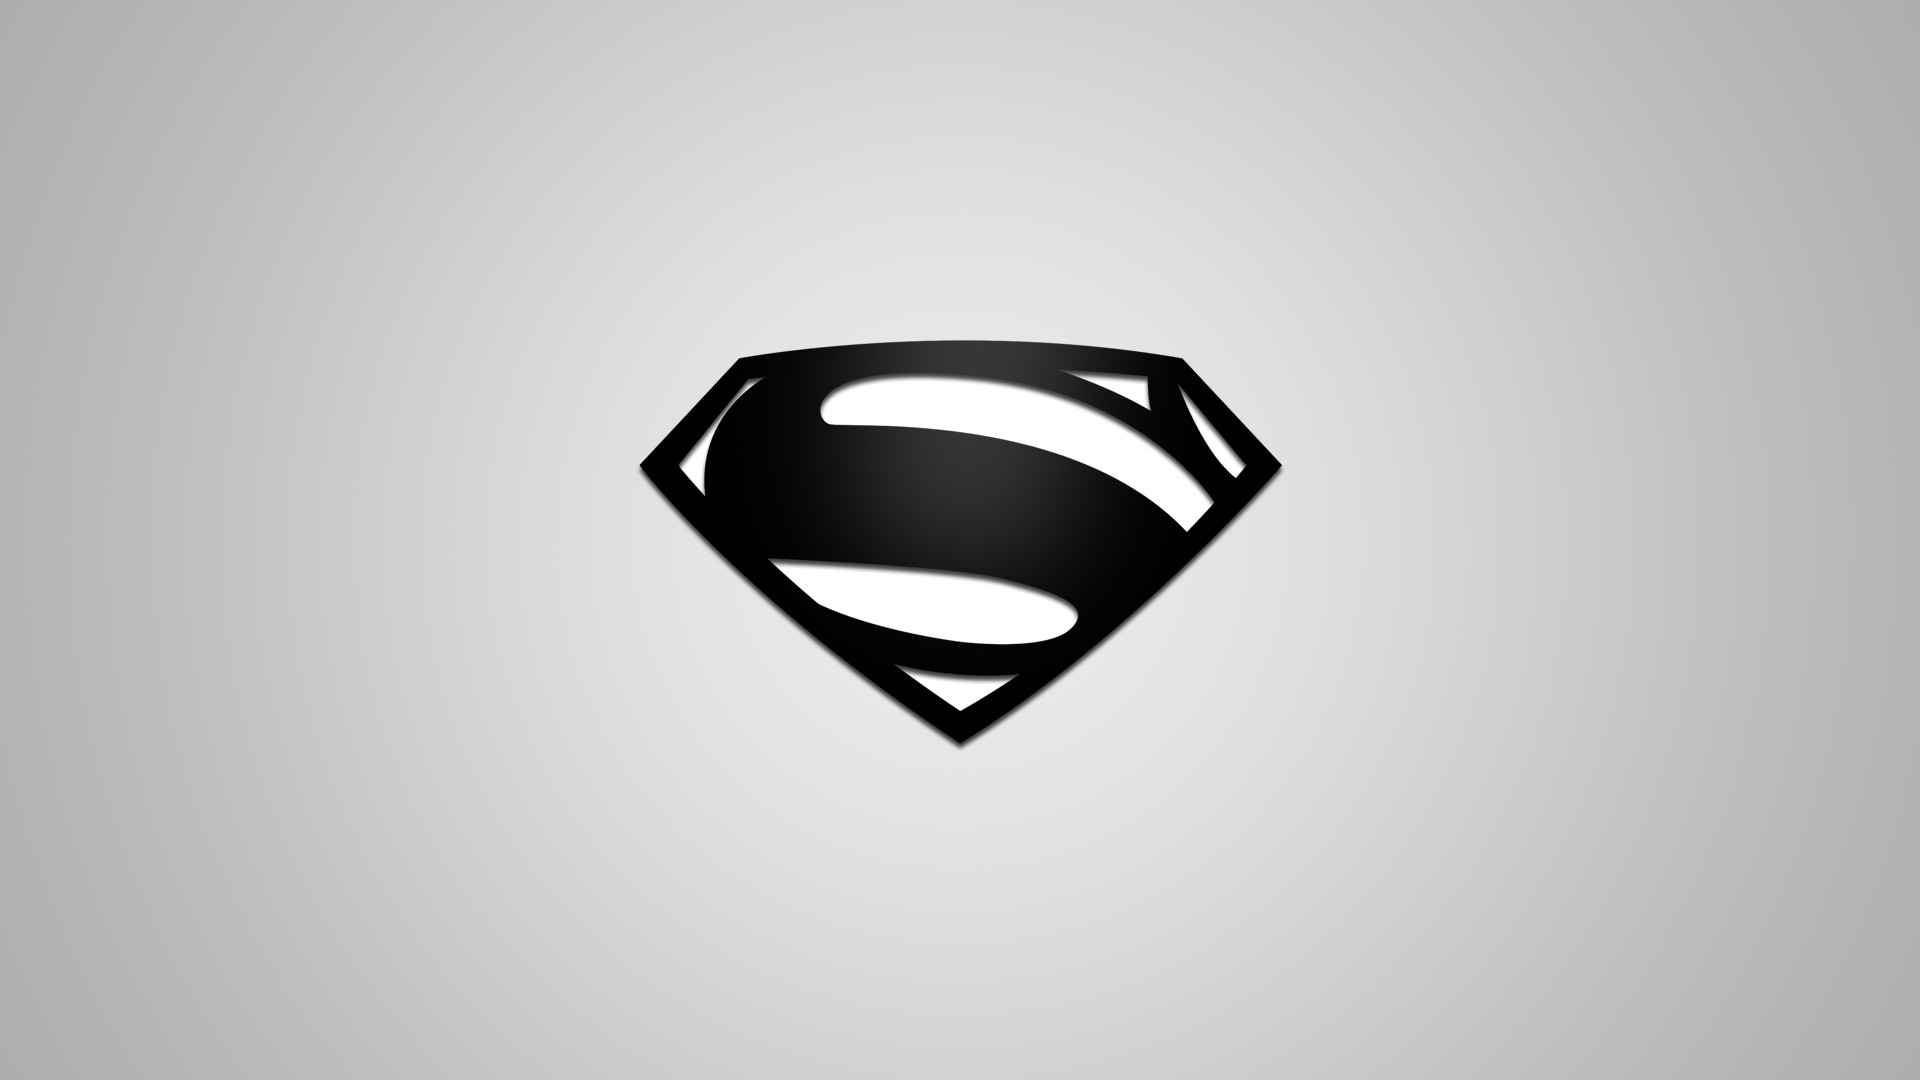 1920x1080 Superman logo(Superman) - HD Wallpapers Image | HD Wallpapers Image